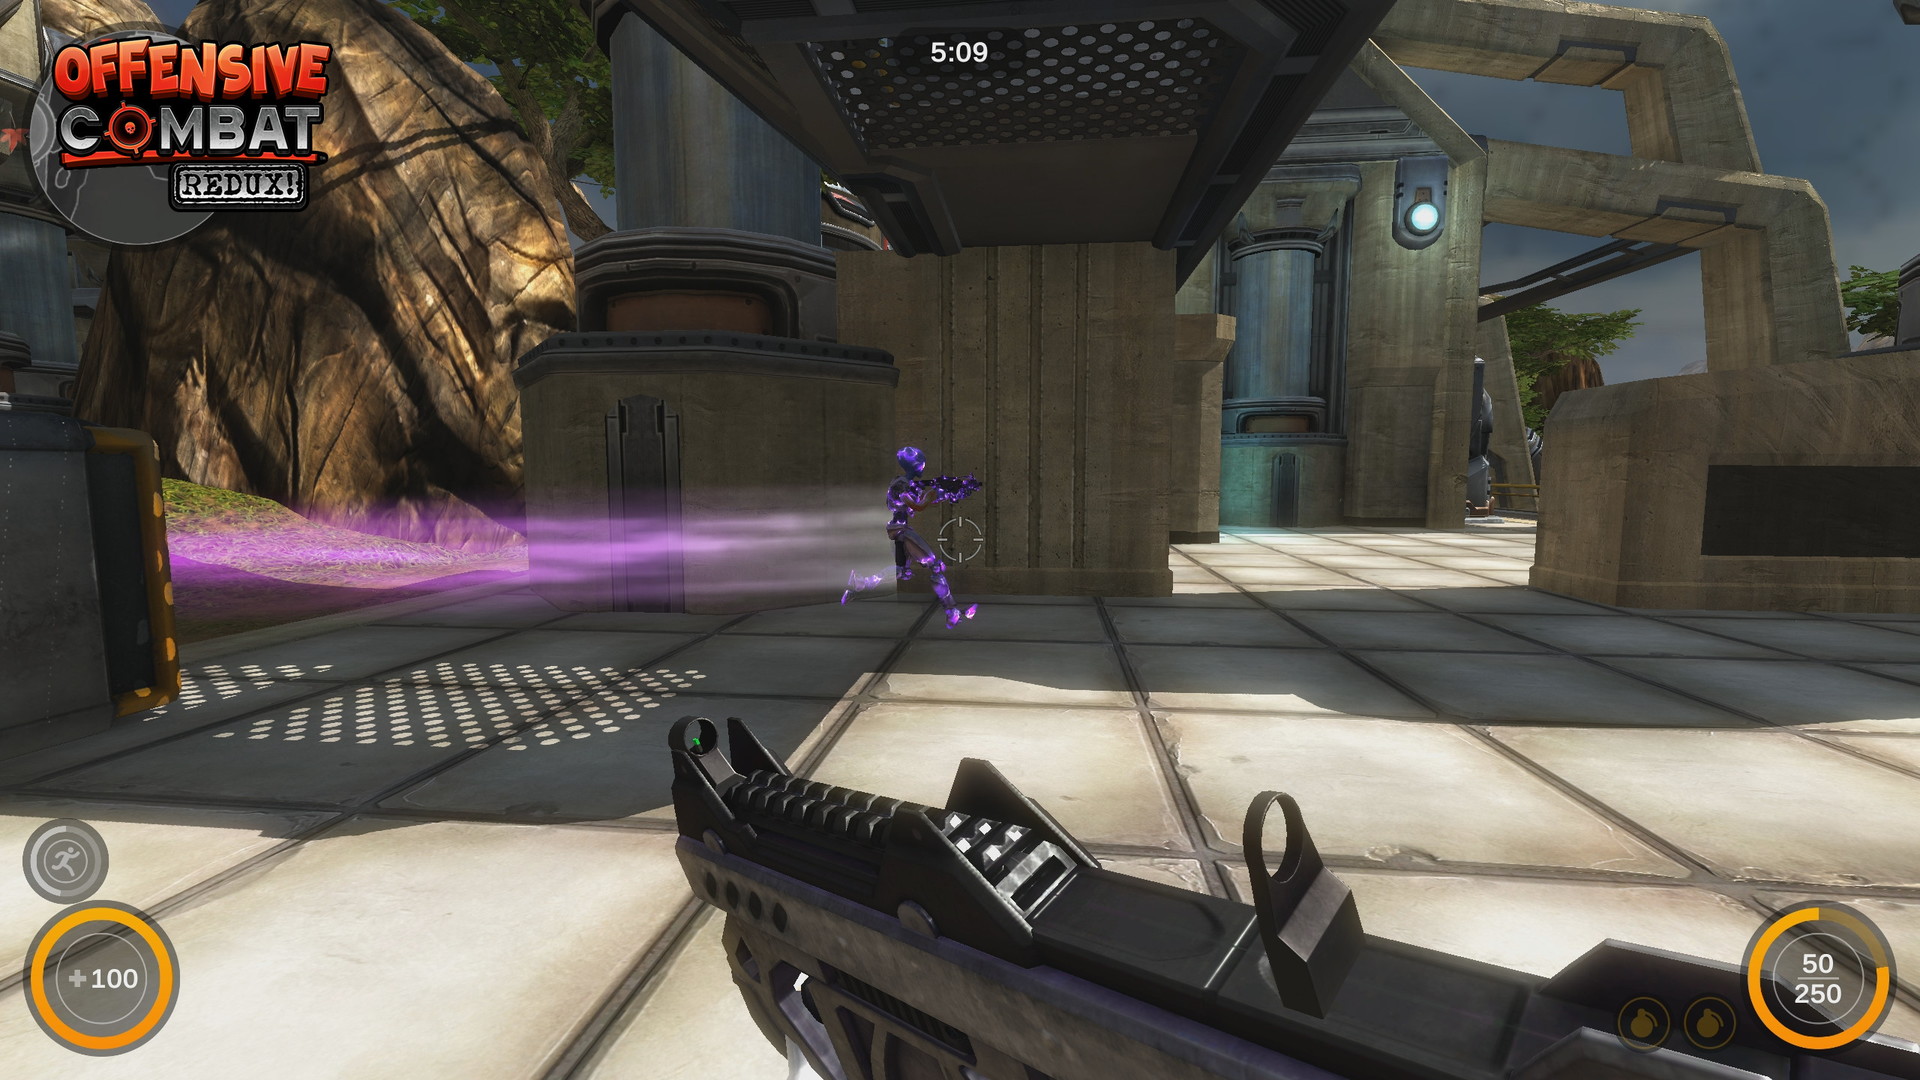 Offensive Combat: Redux! - screenshot 7